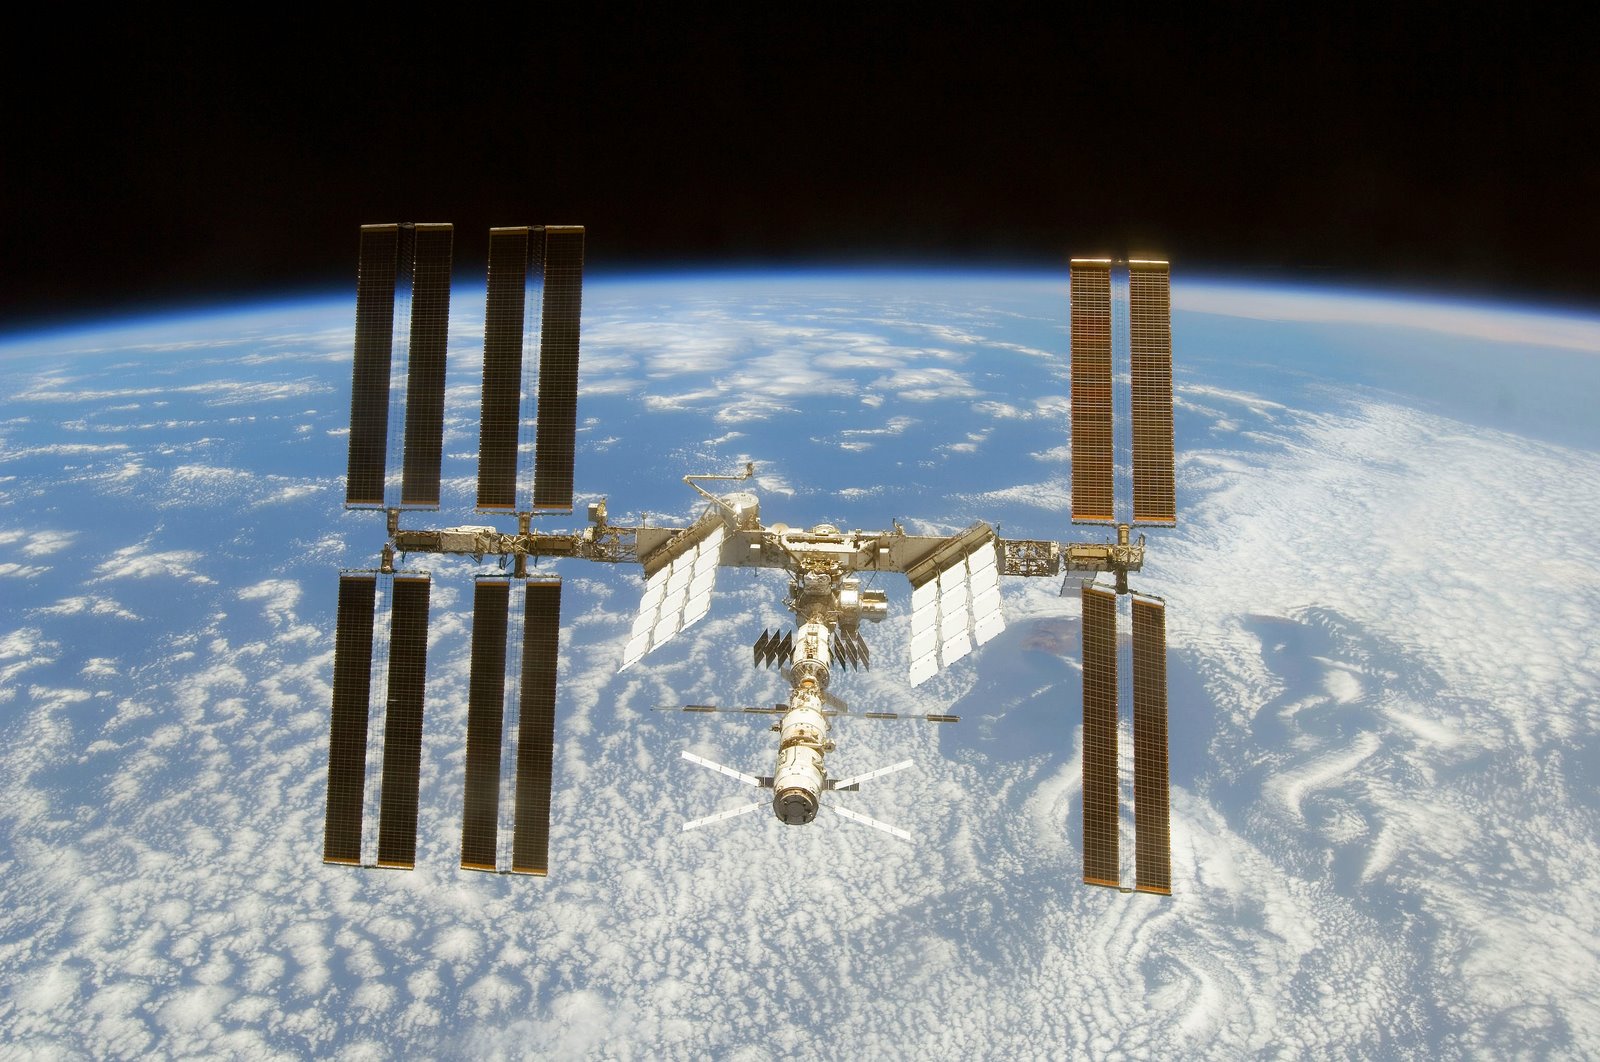 [gpw-20061021-NASA-S124-E-010006-black-space-Earth-horizon-white-clouds-blue-water-International-Space-Station-20080611-large.jpg]